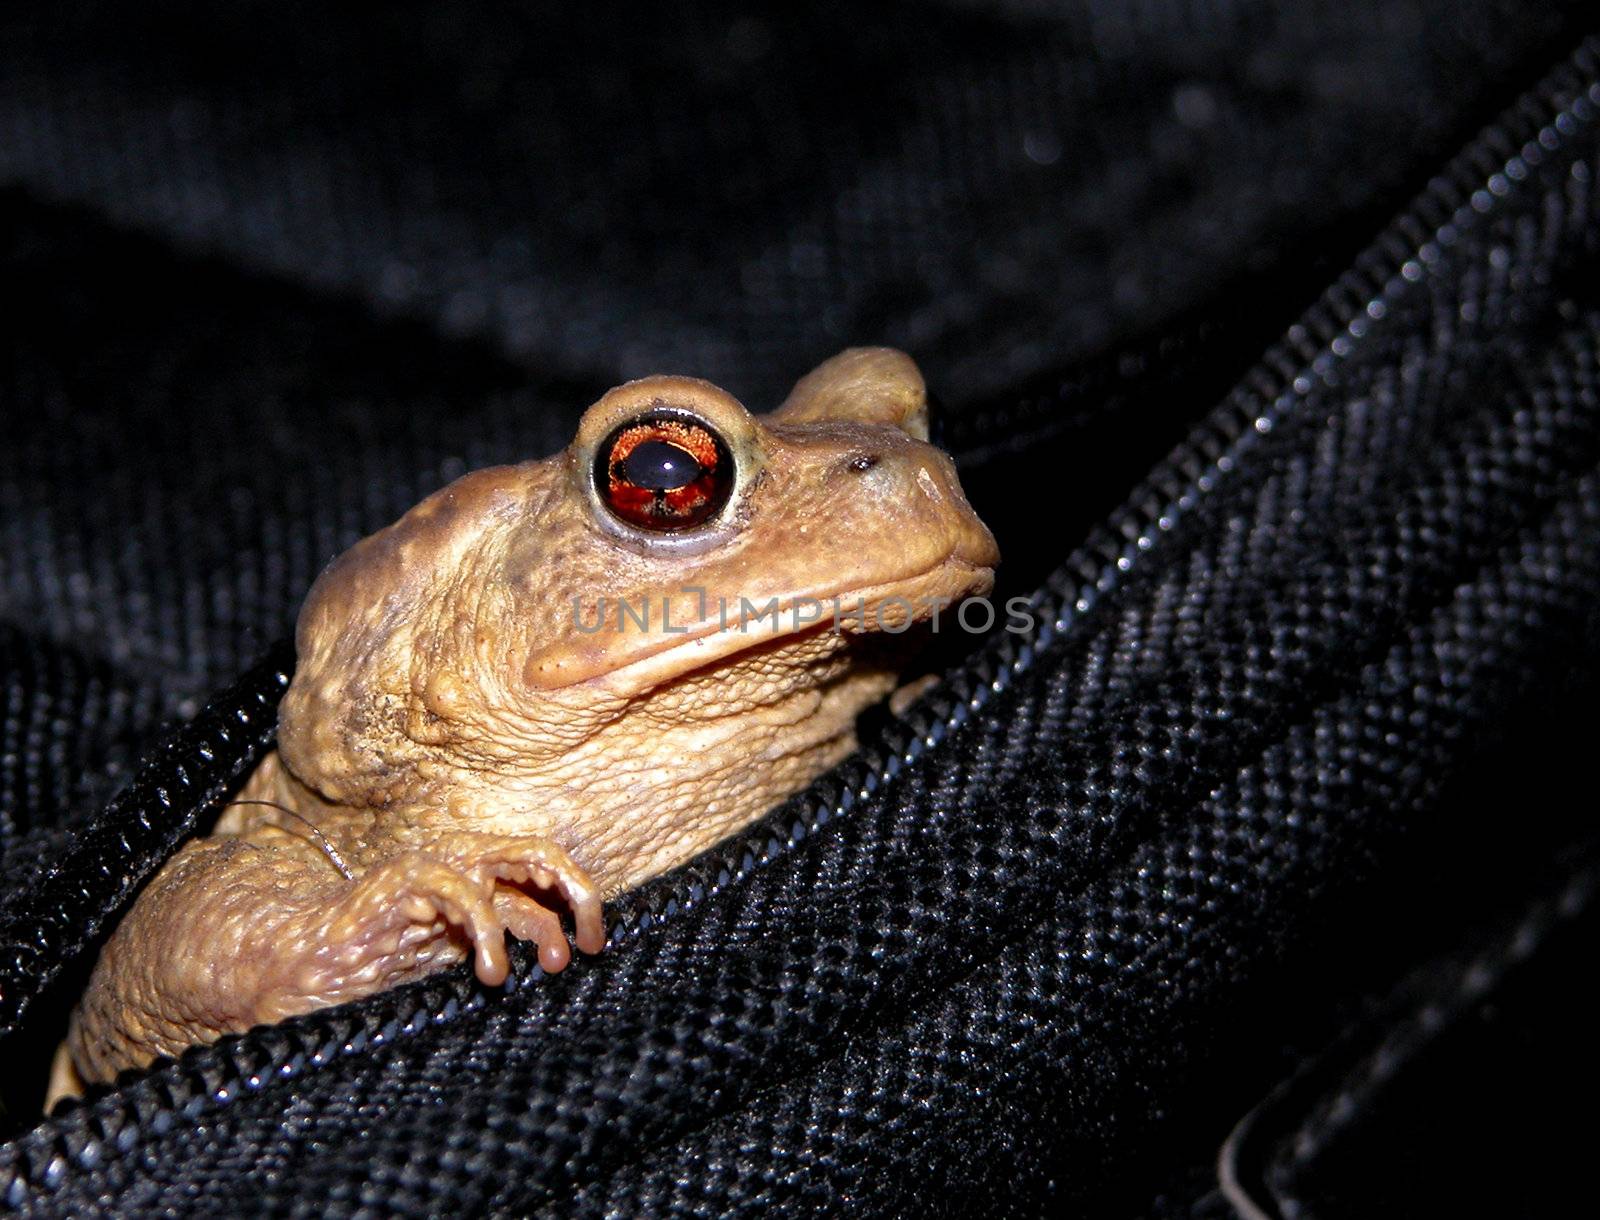 Little frog inside the bag